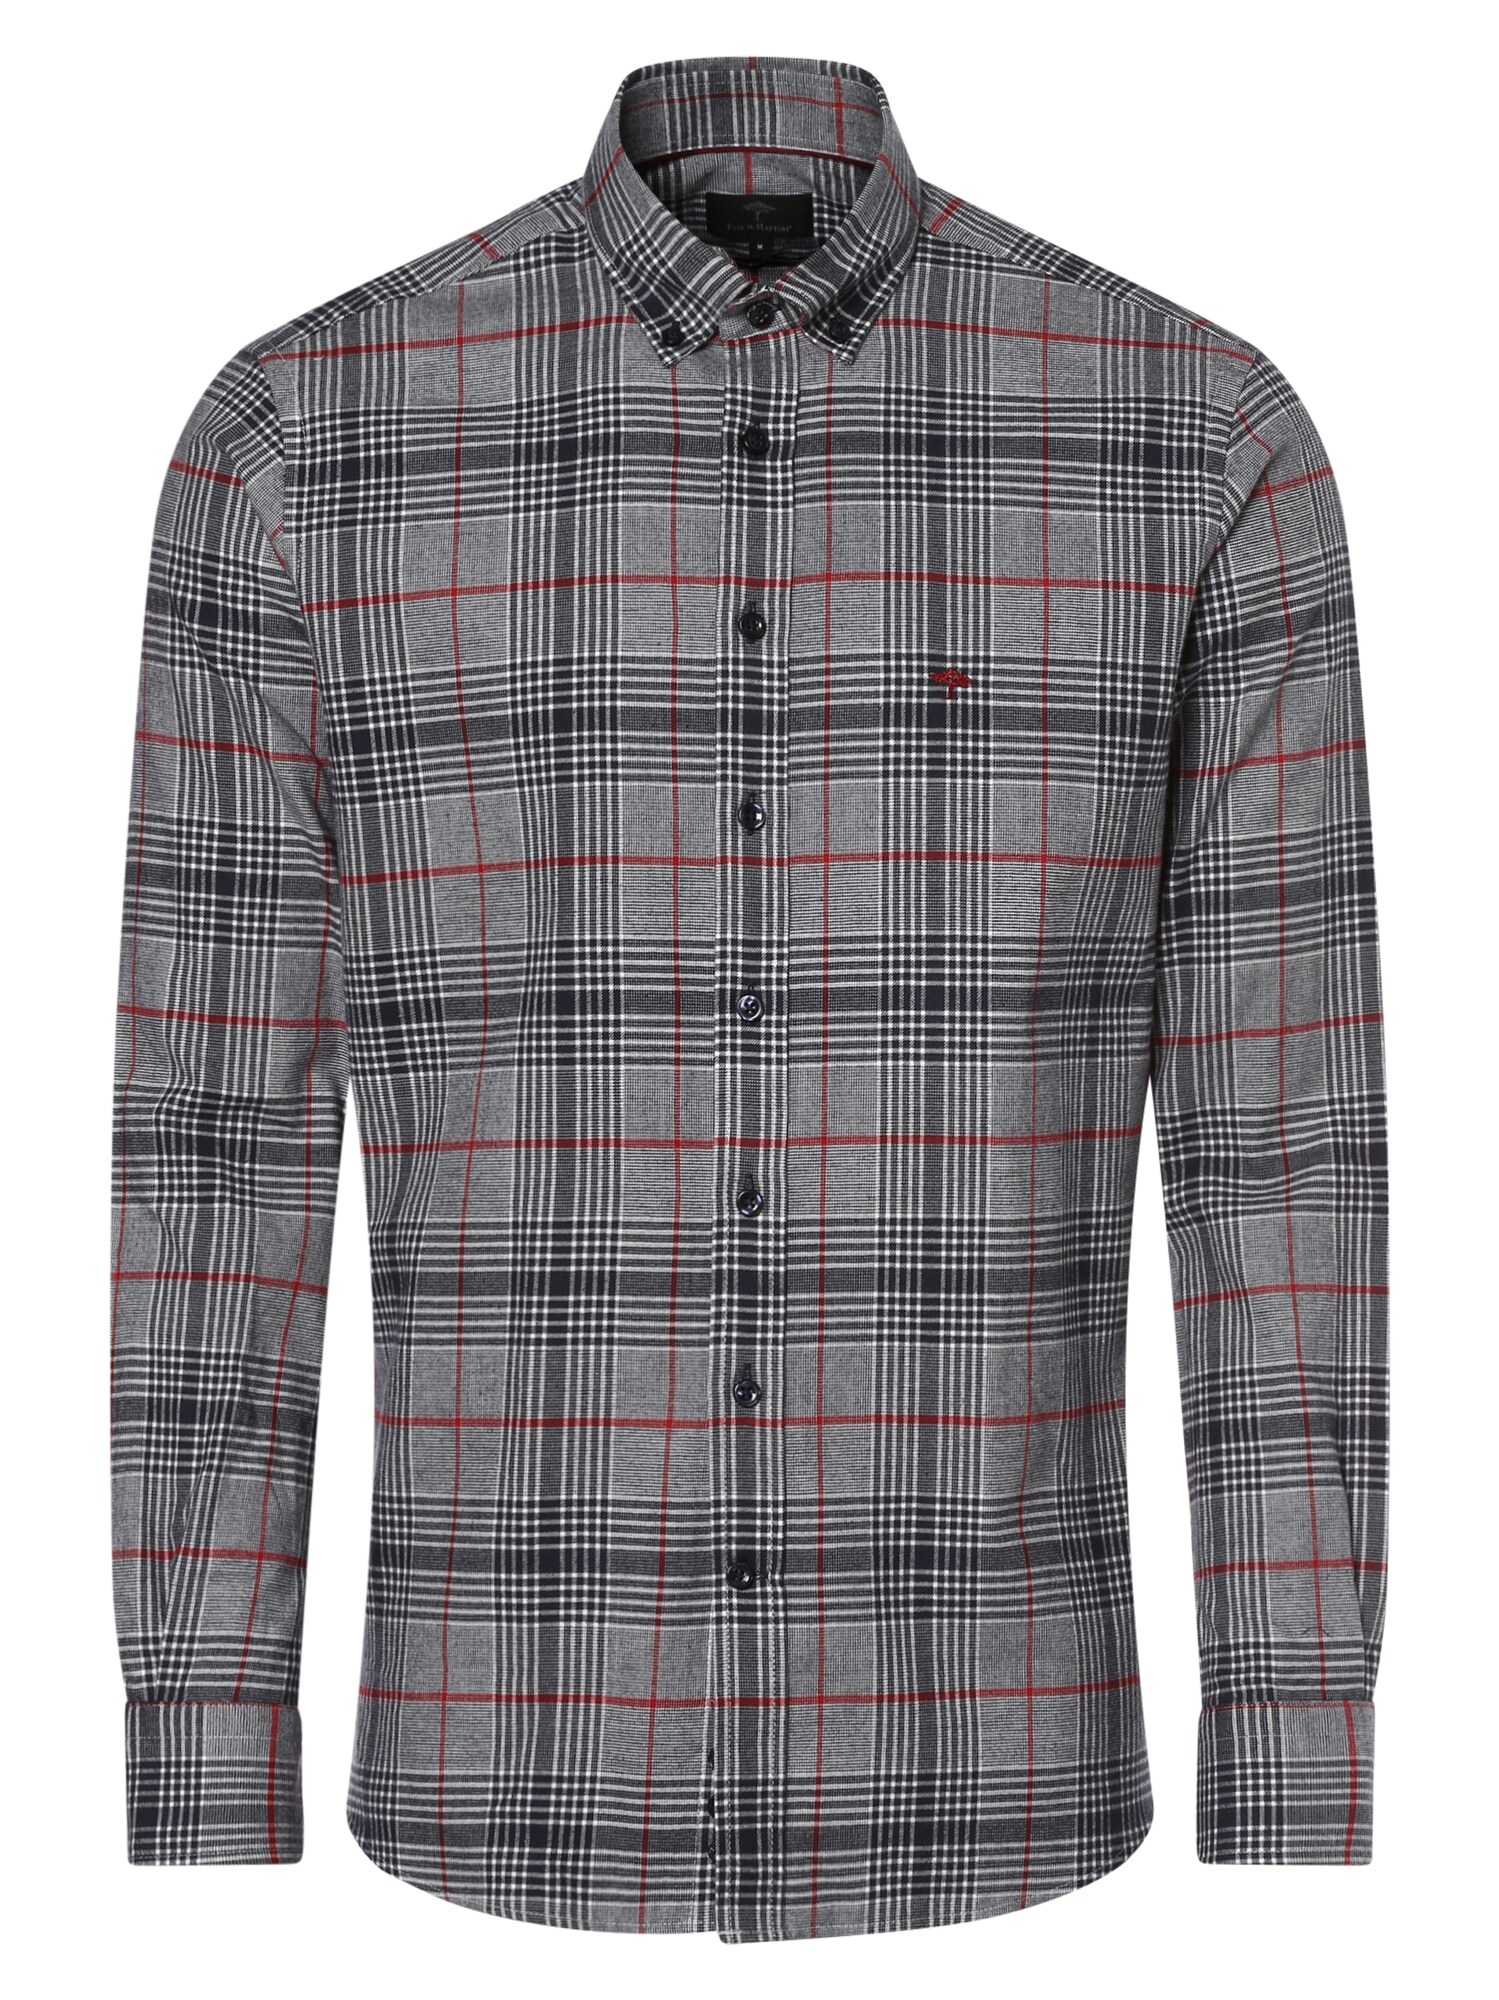 FYNCH-HATTON Marškiniai pilka / antracito spalva / raudona / balkšva